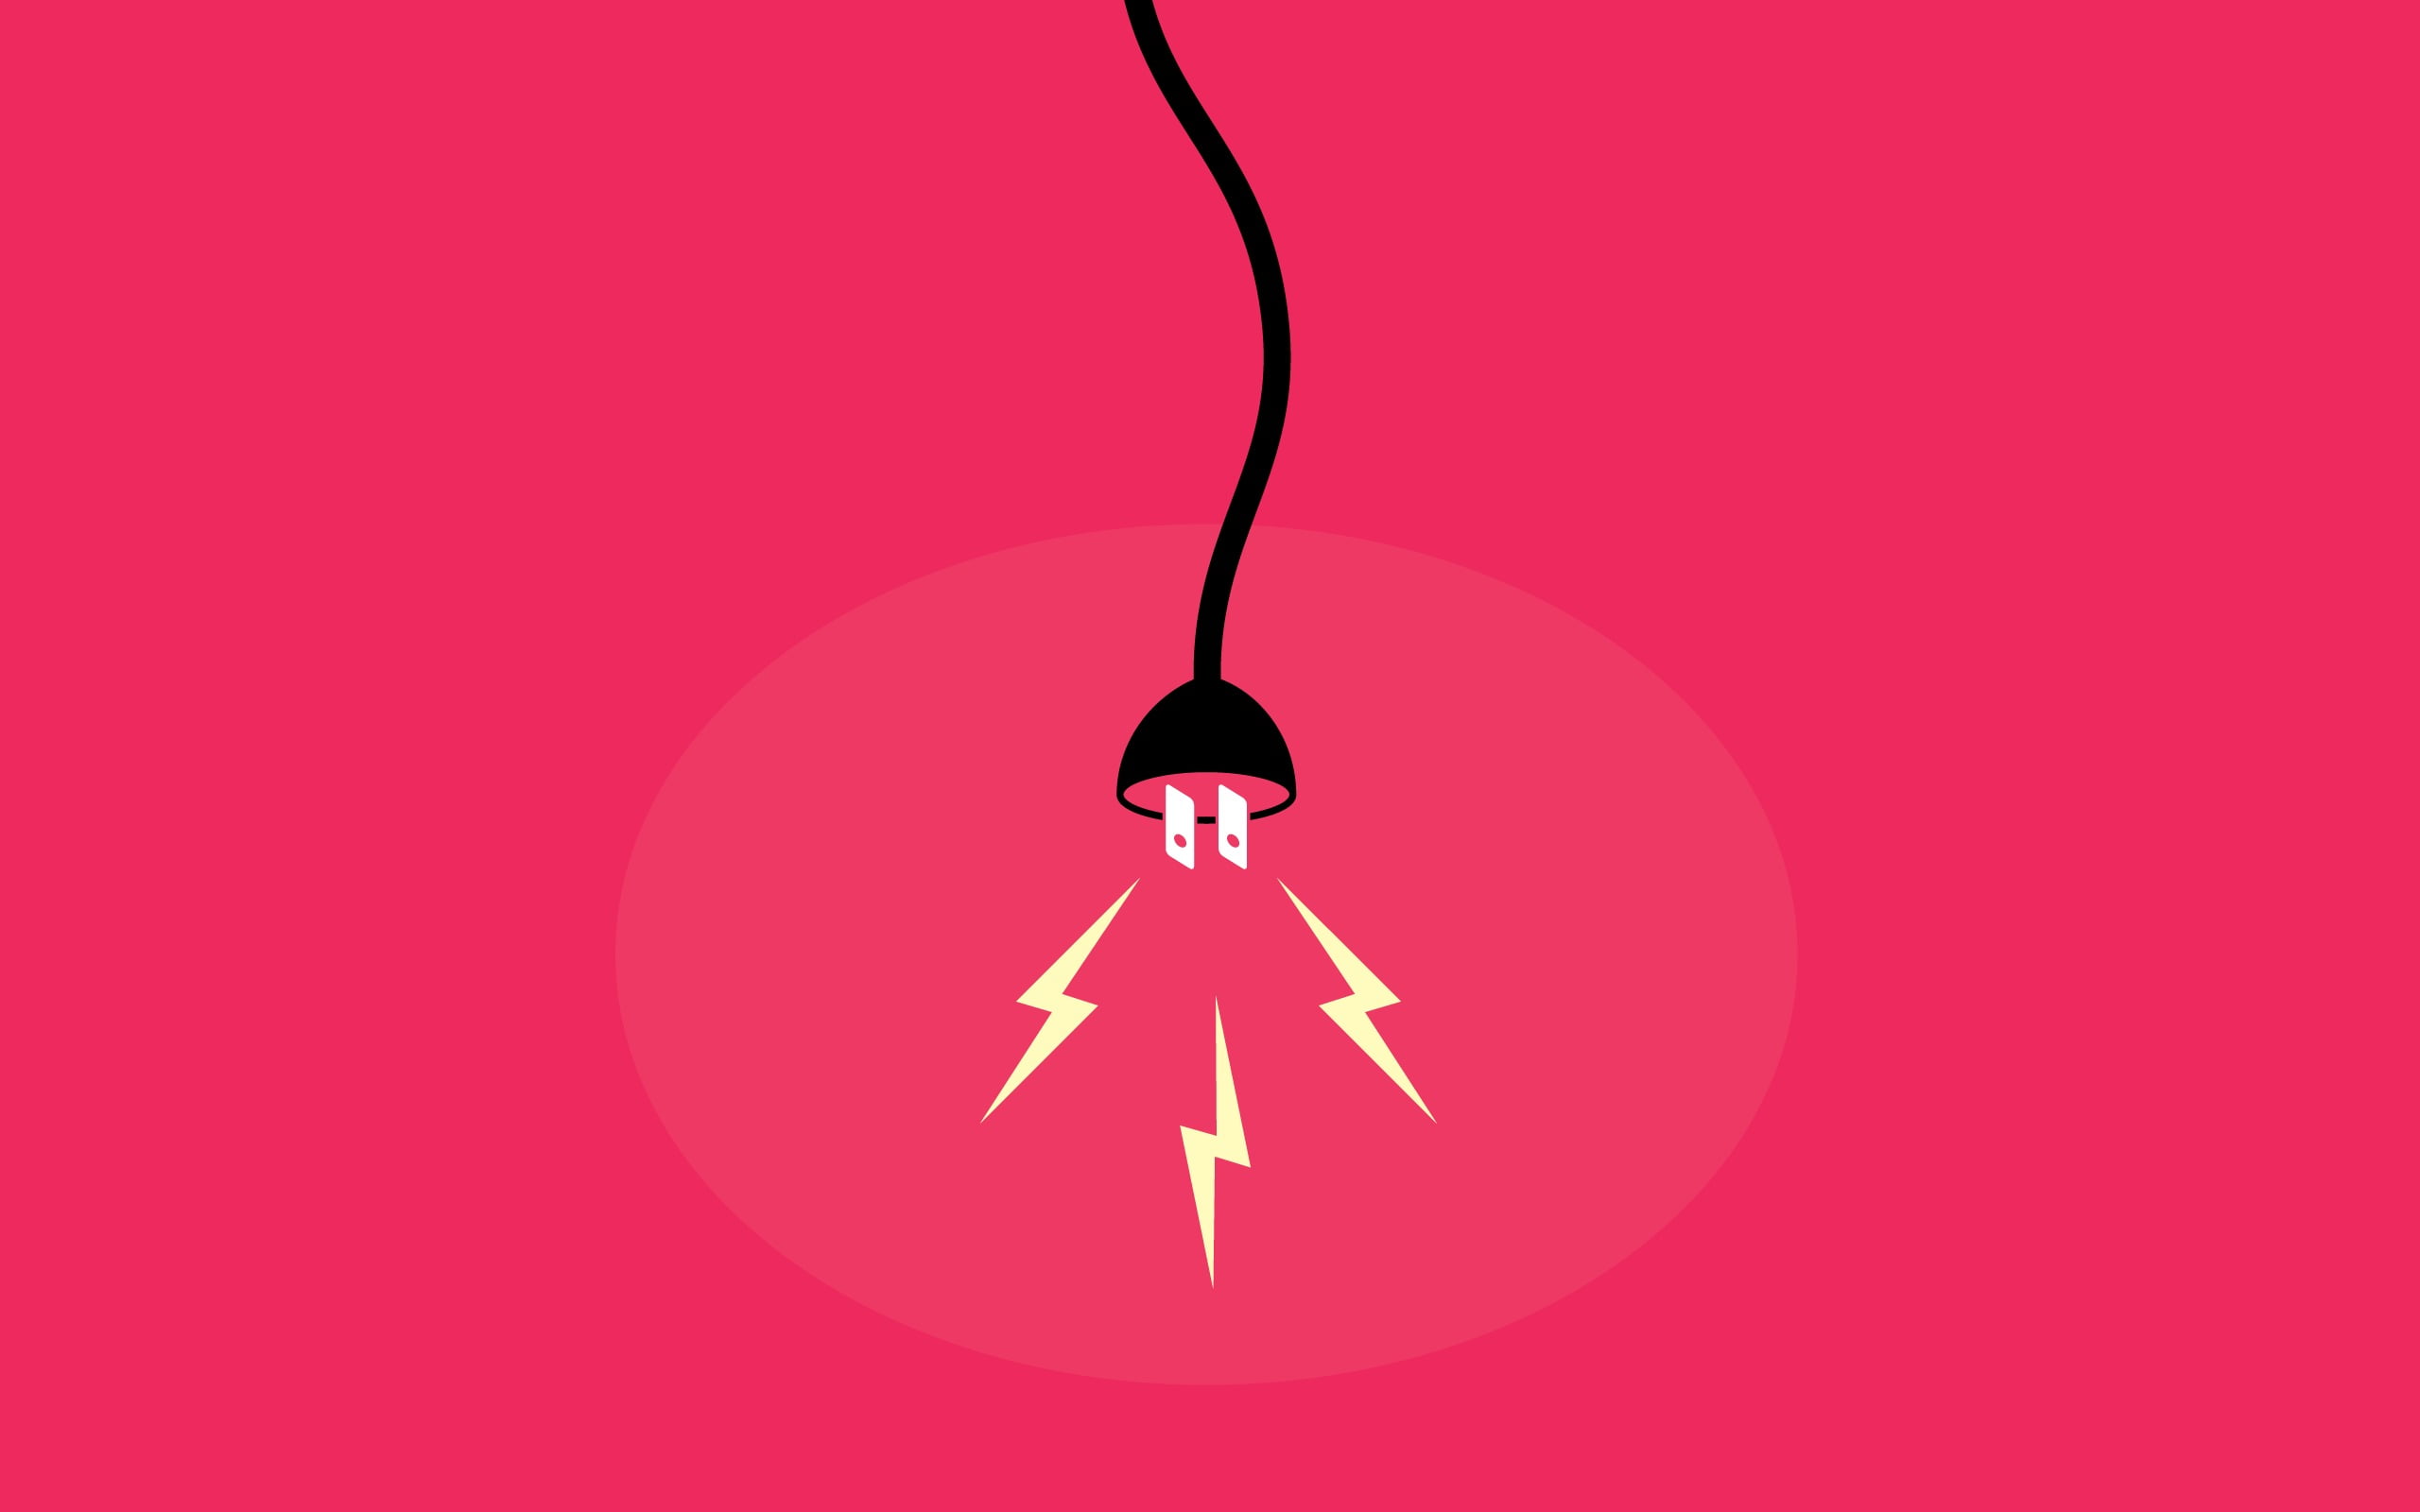 electric plug illustration, electricity, power cord, minimalism